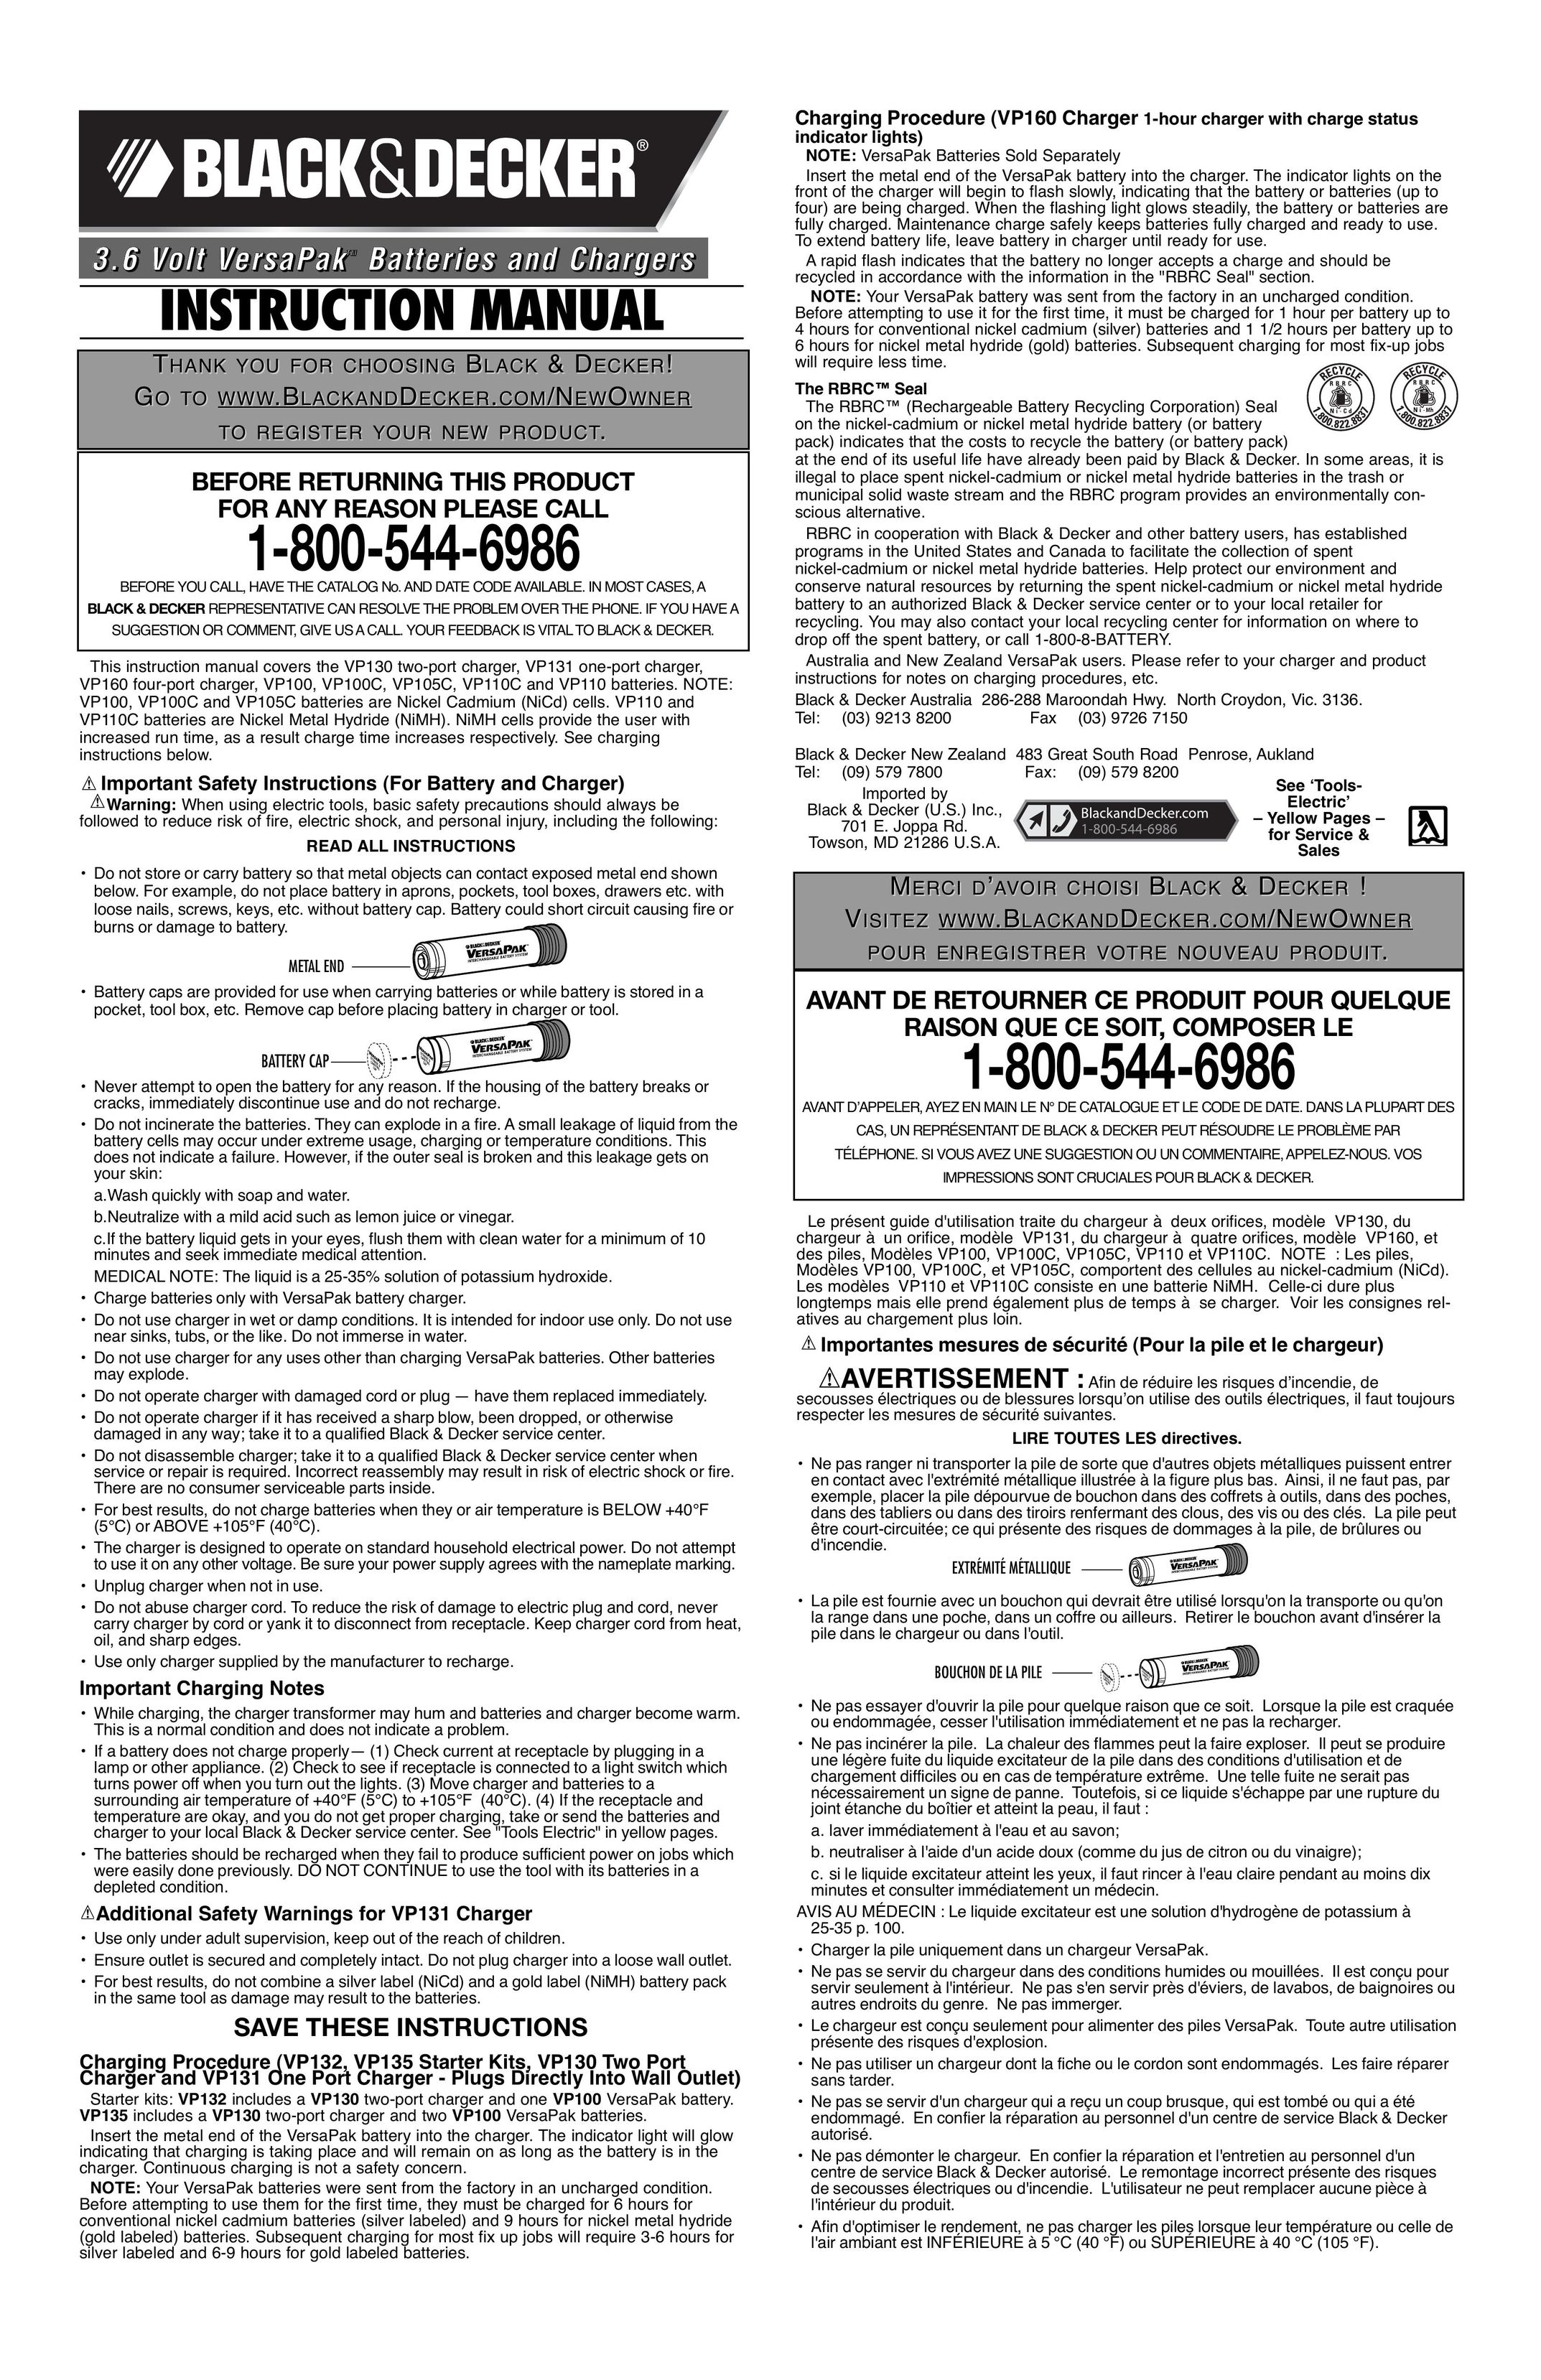 Black & Decker VP105C Battery Charger User Manual